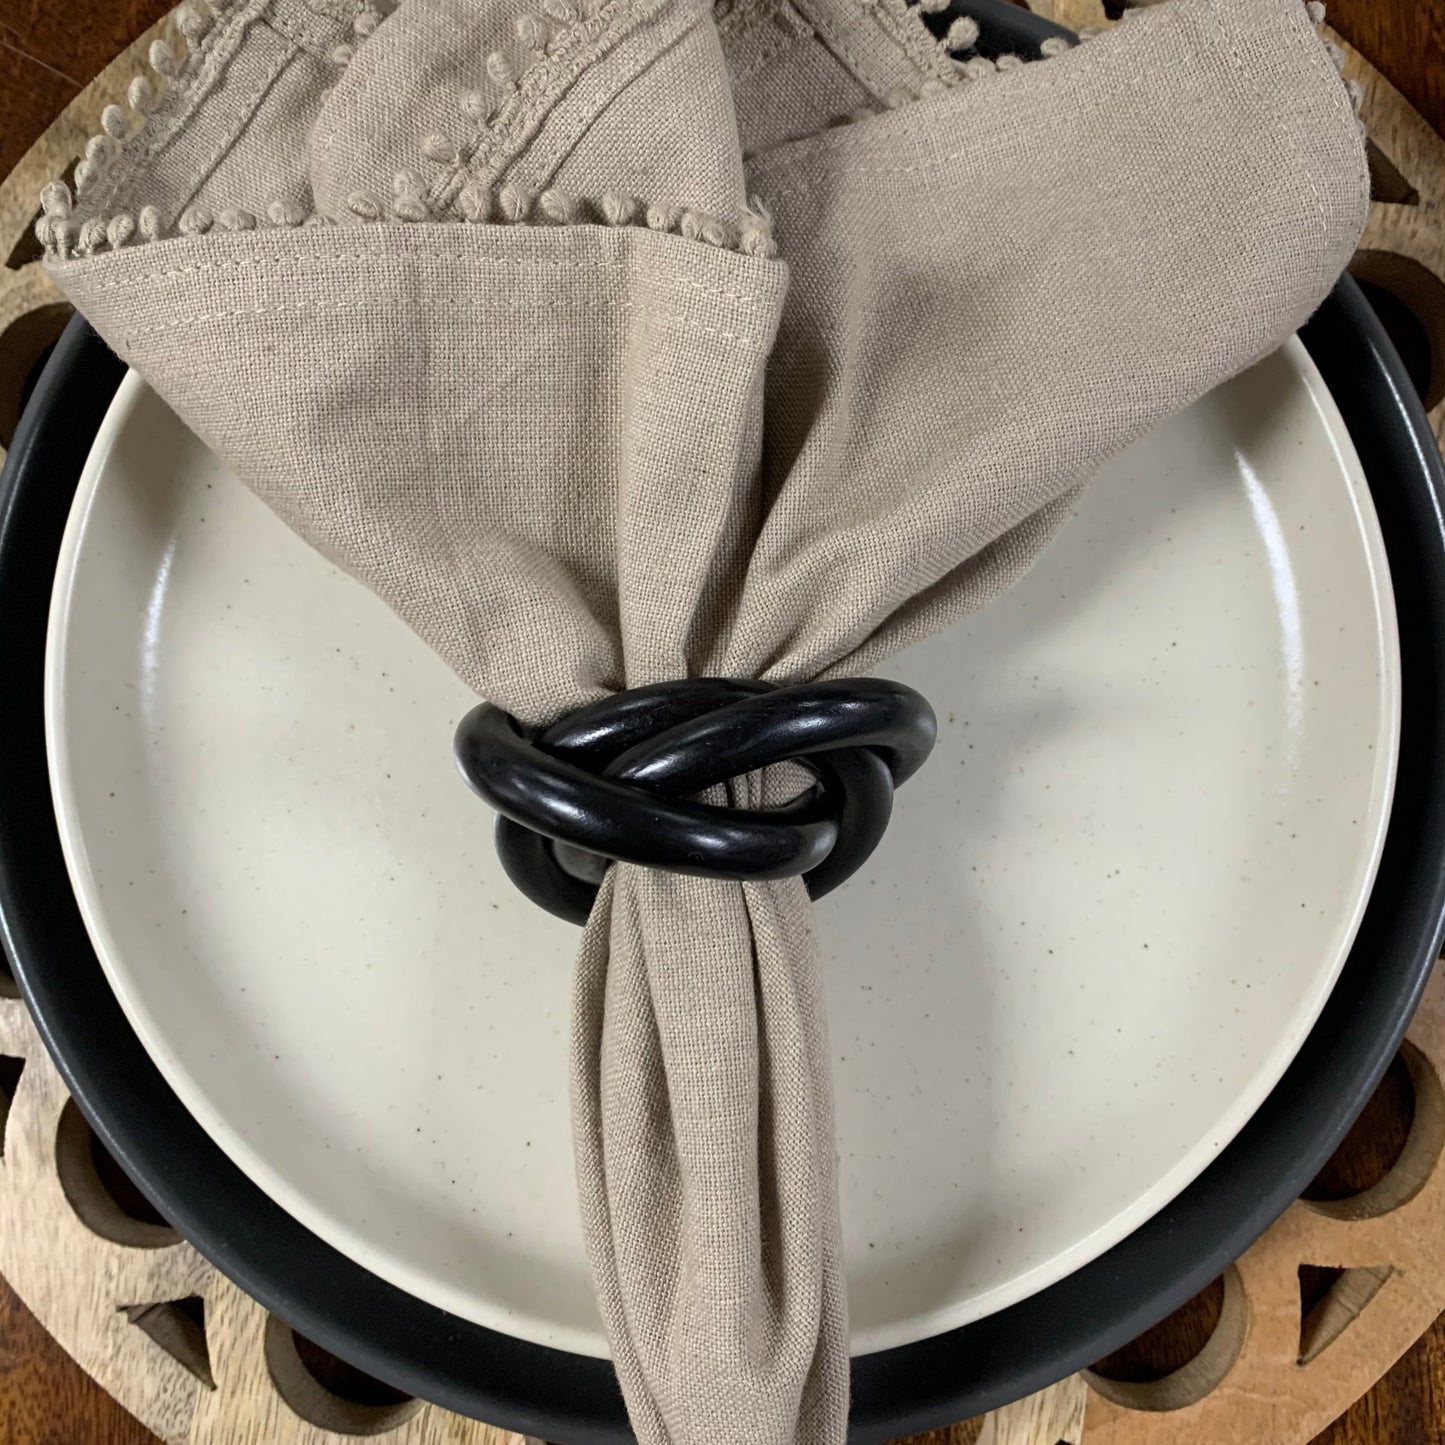 black napkin ring on khaki colored napkin set on plates.